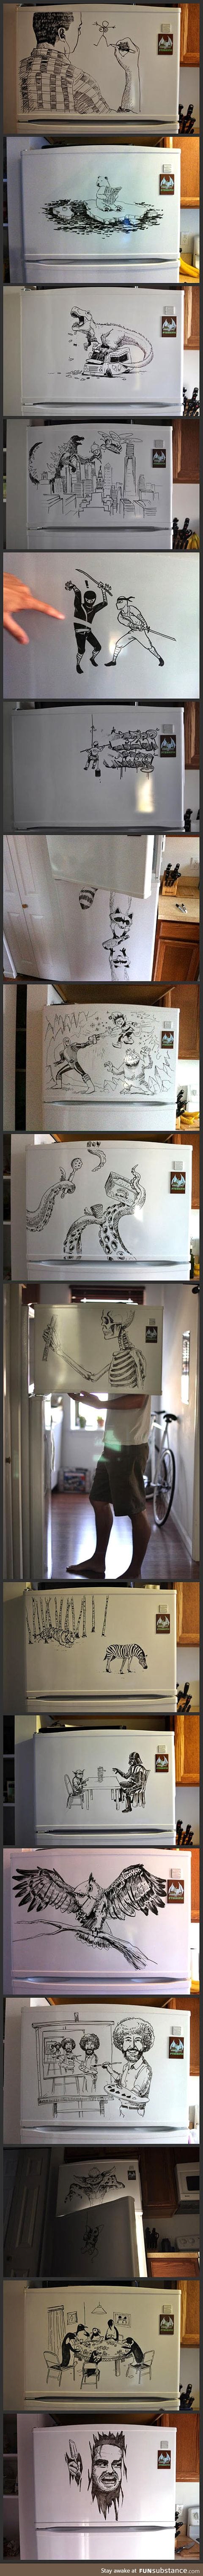 Clever freezer art